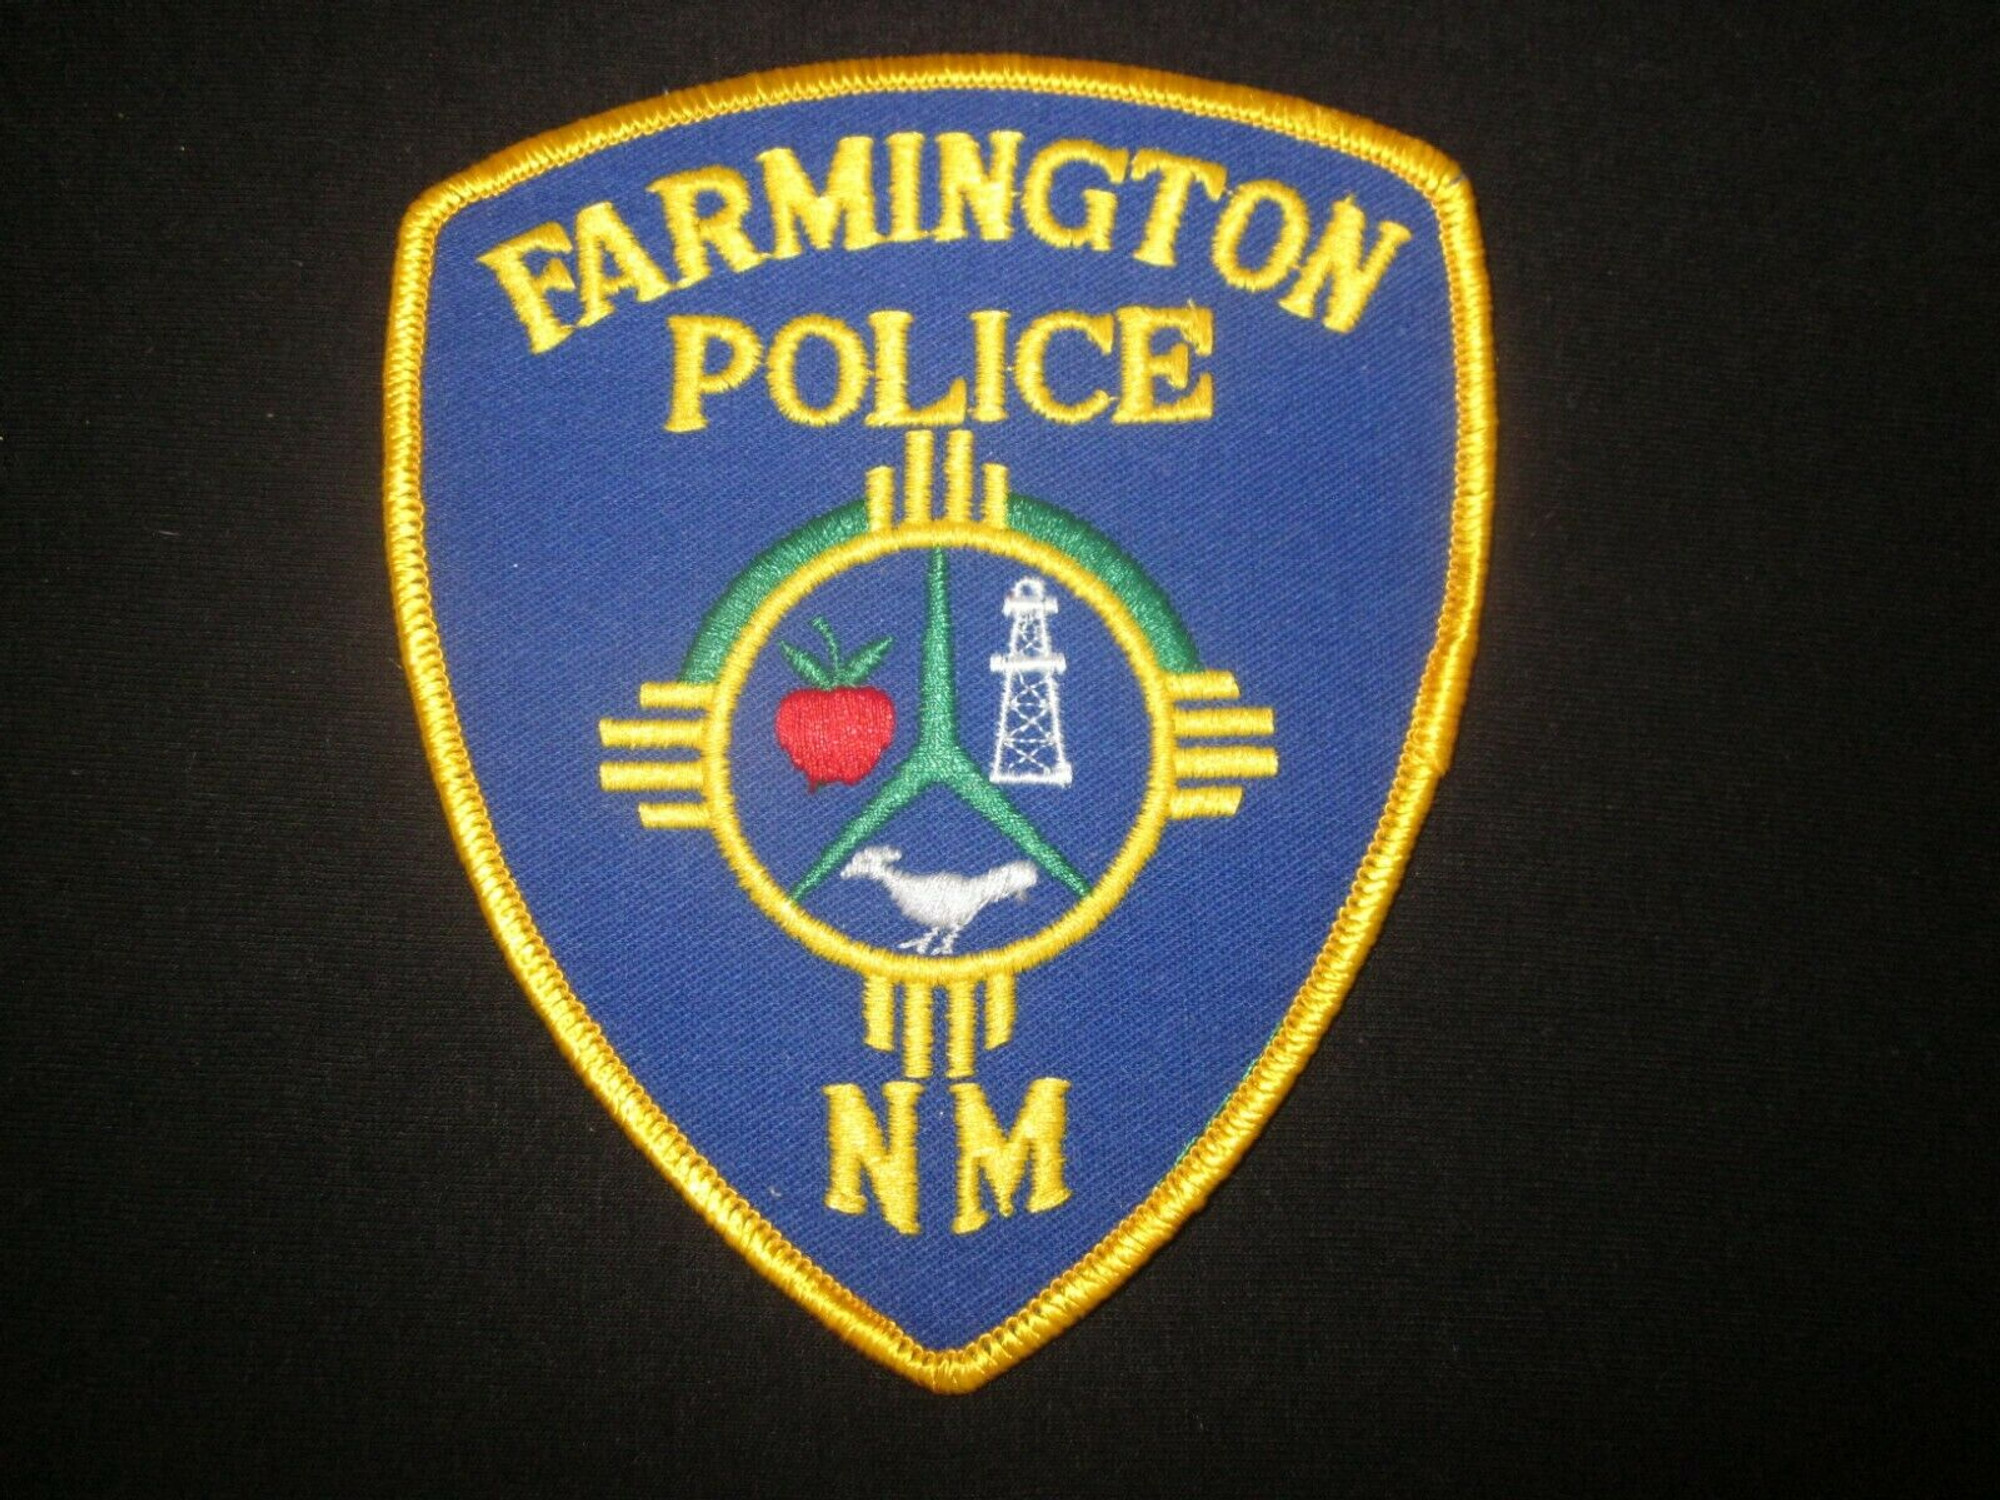 Farmington NM Police Patch - Large